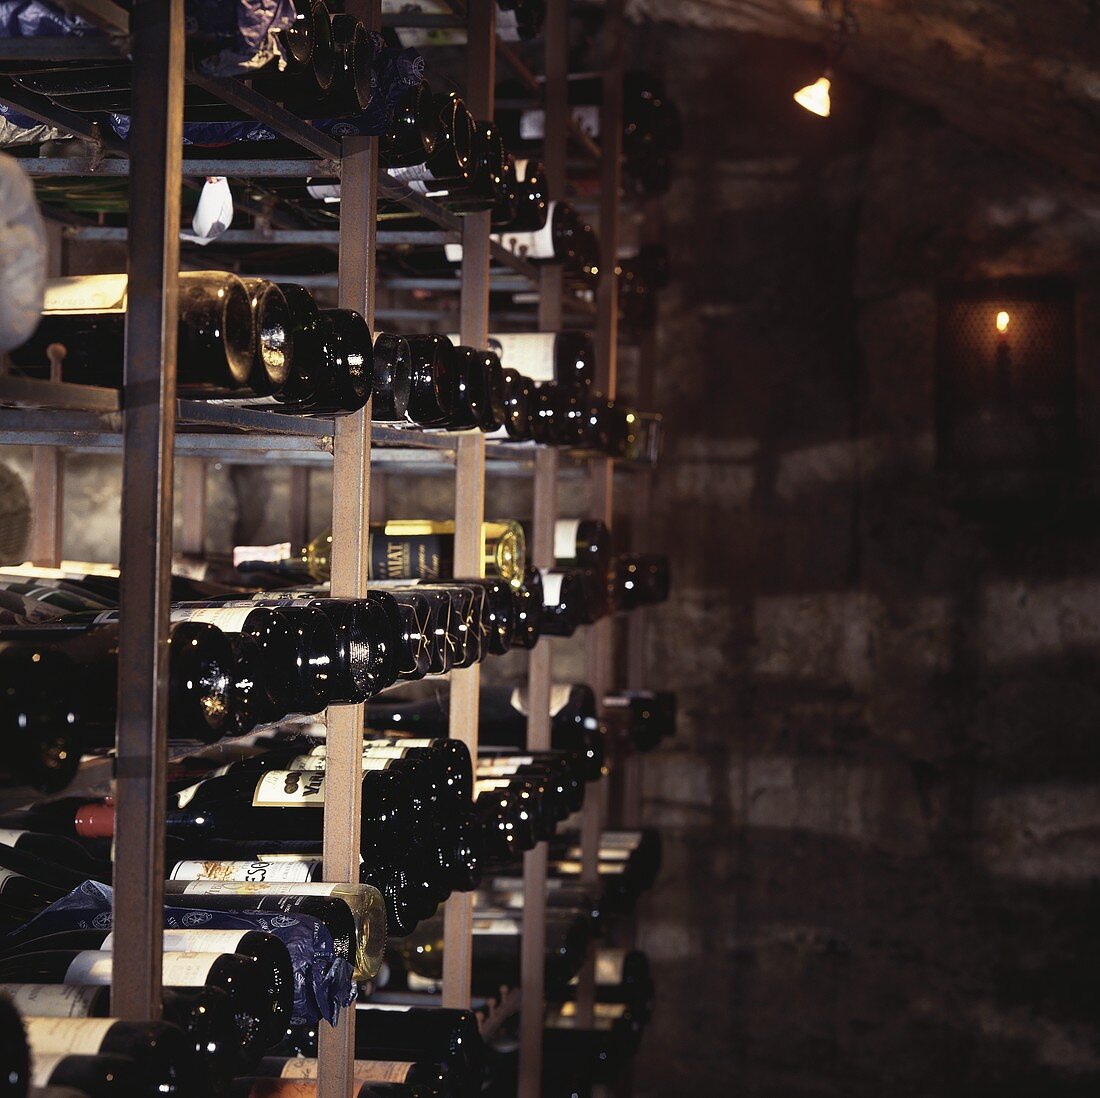 Several wine bottles in a rack